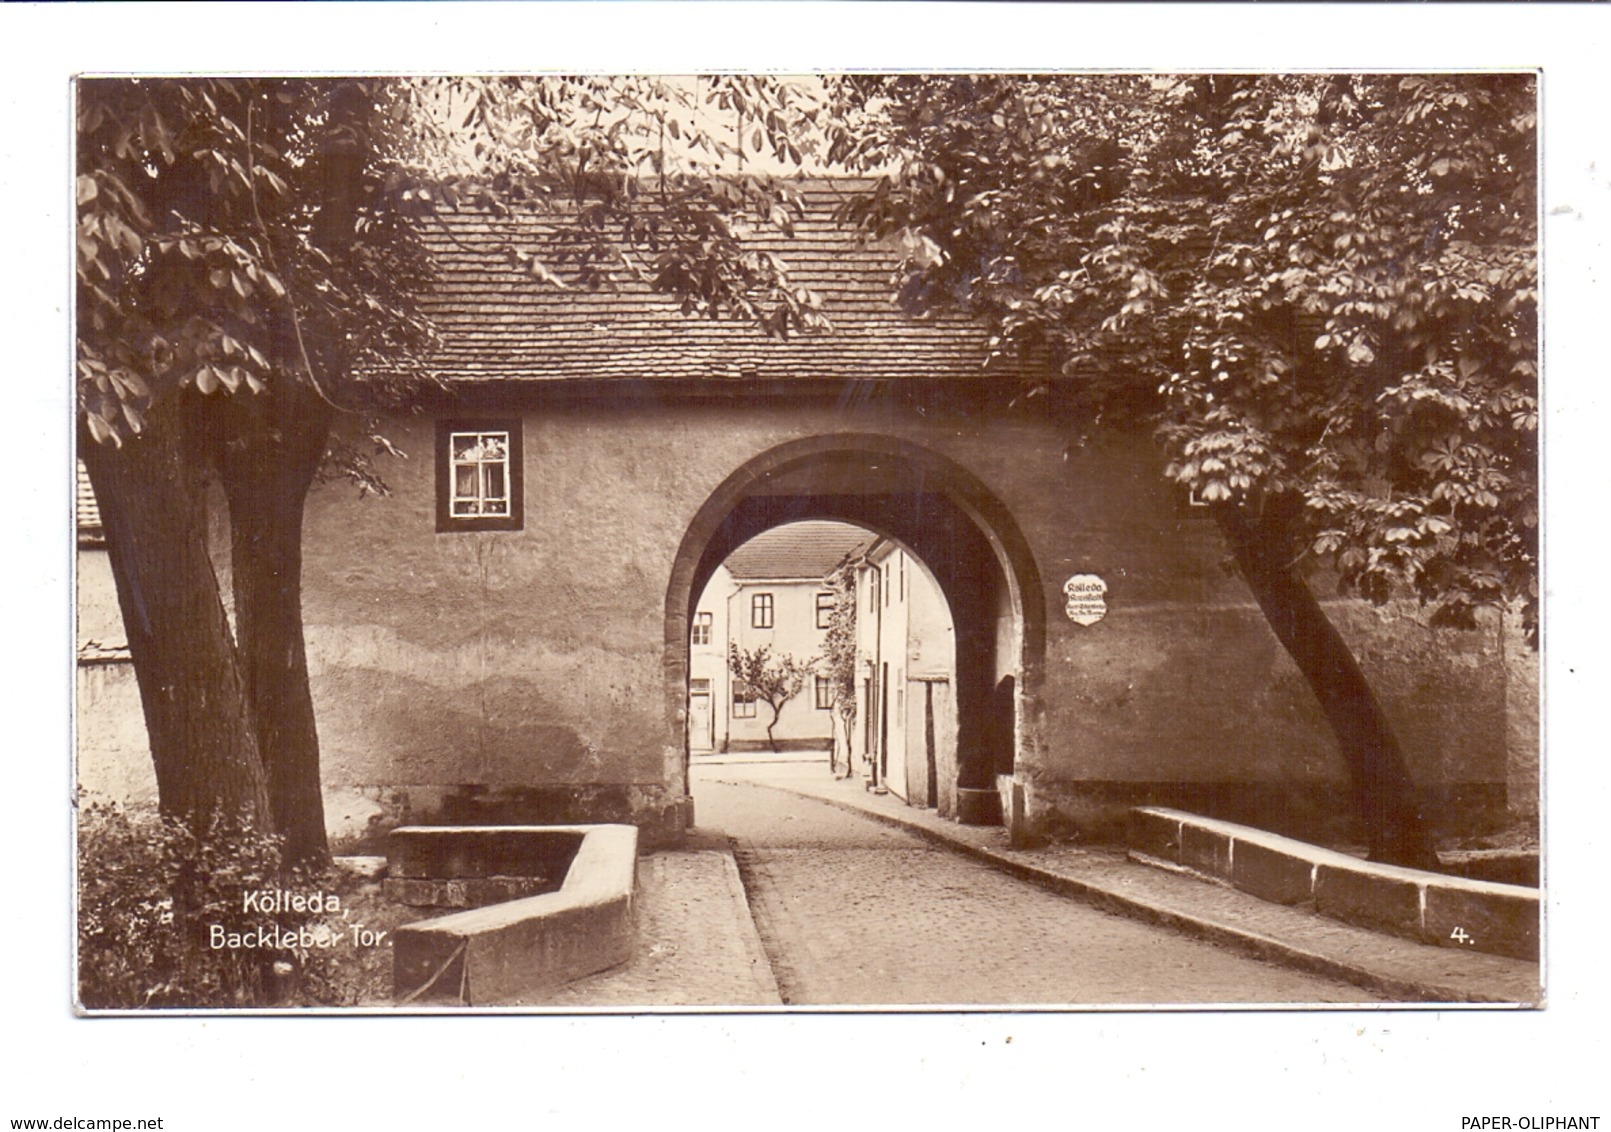 0-5234 KÖLLEDA, Backleber Tor, 1930 - Soemmerda